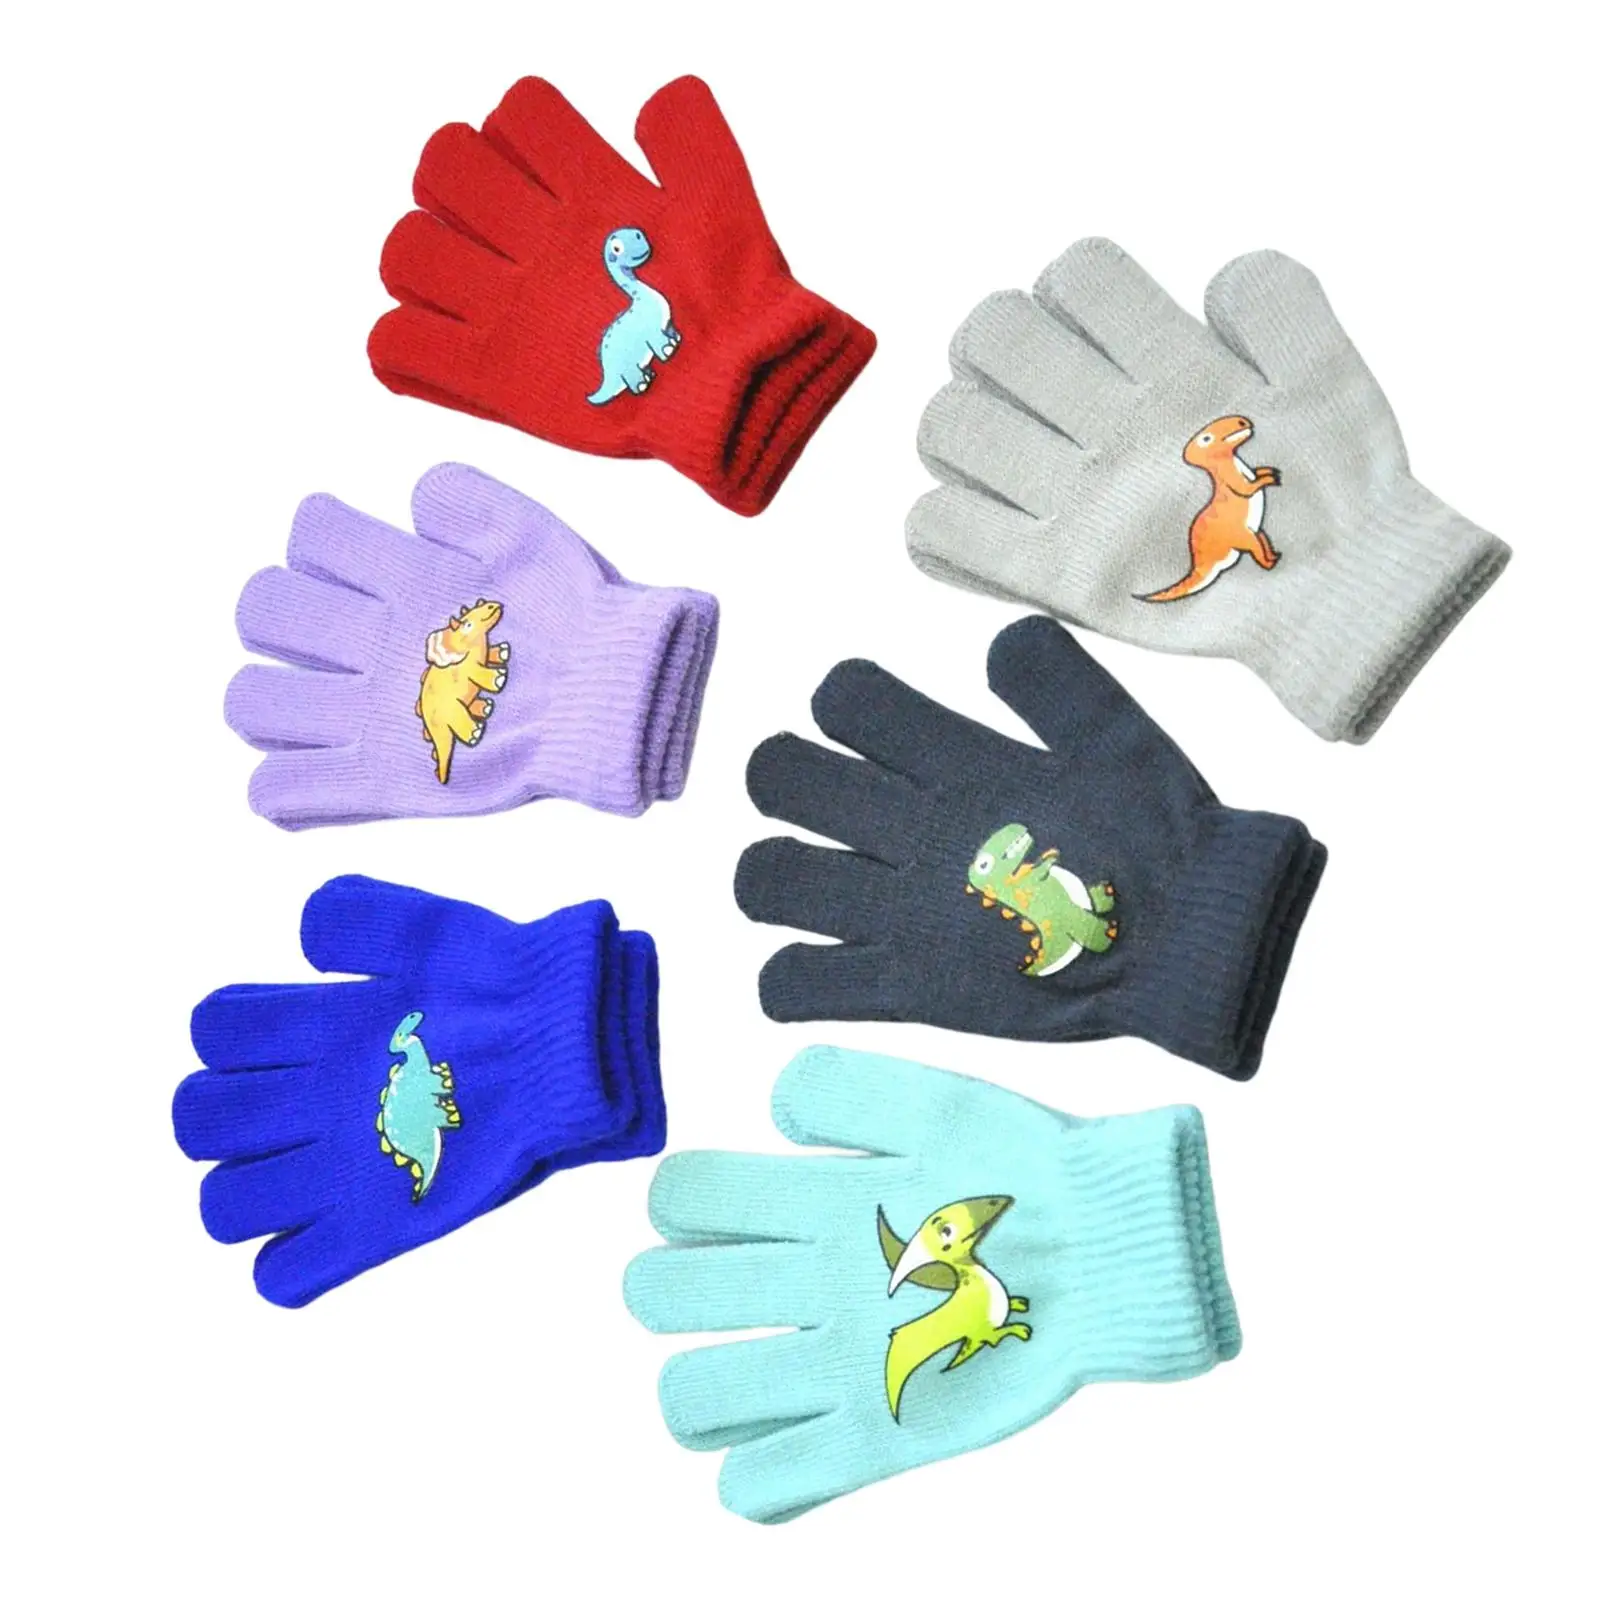 Unisex Kids Gloves Warm Winter Stretchy Full Fingers Mitten Knitted Toddler